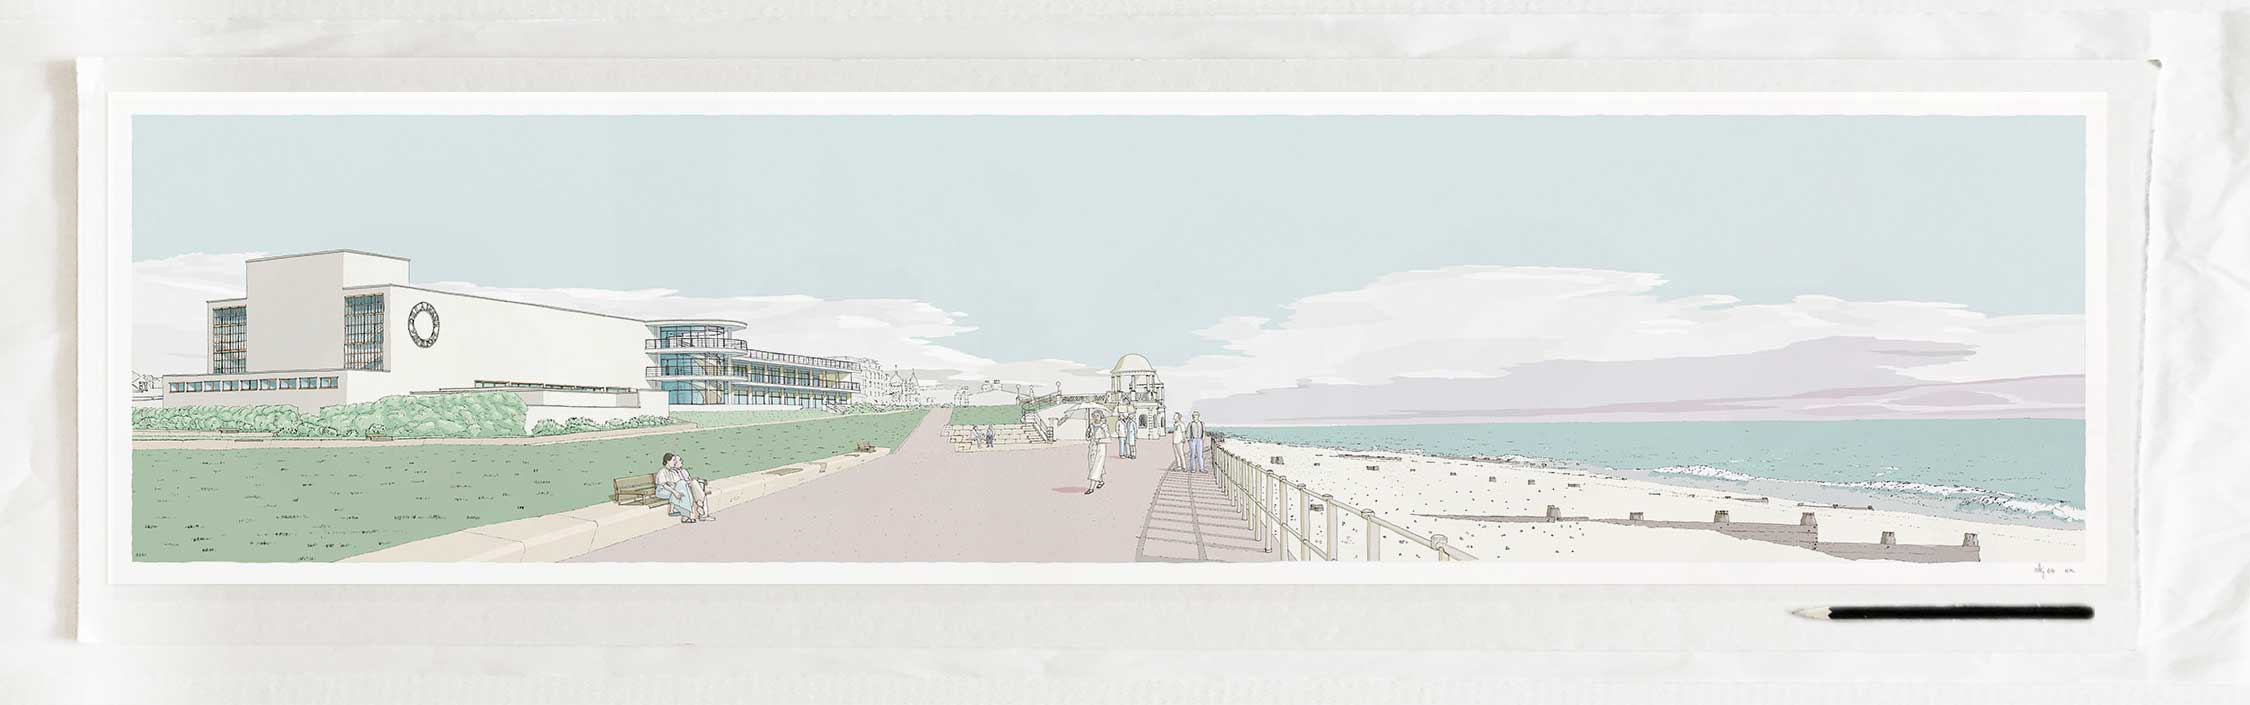 art print titledDe La Warr Pavilion Bexhill on Sea Pebble Beach by artist alej ez